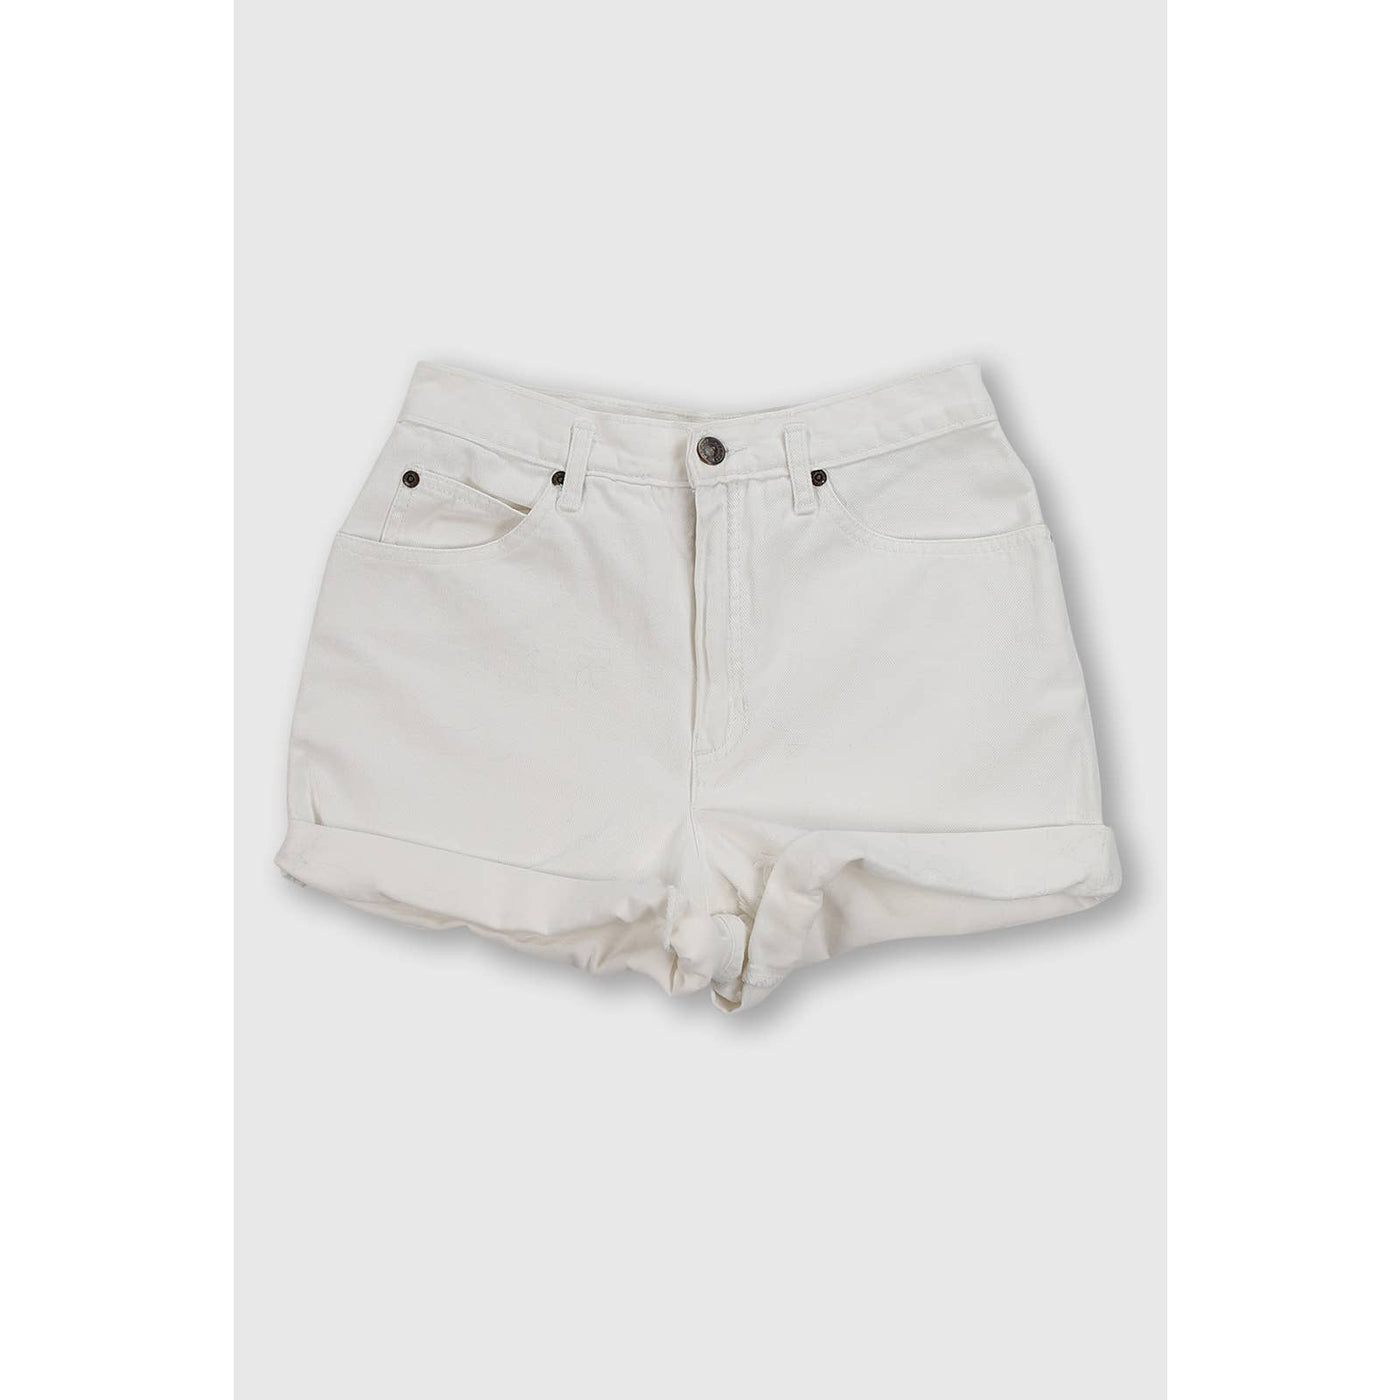 Vintage Lizwear White High Waist Shorts